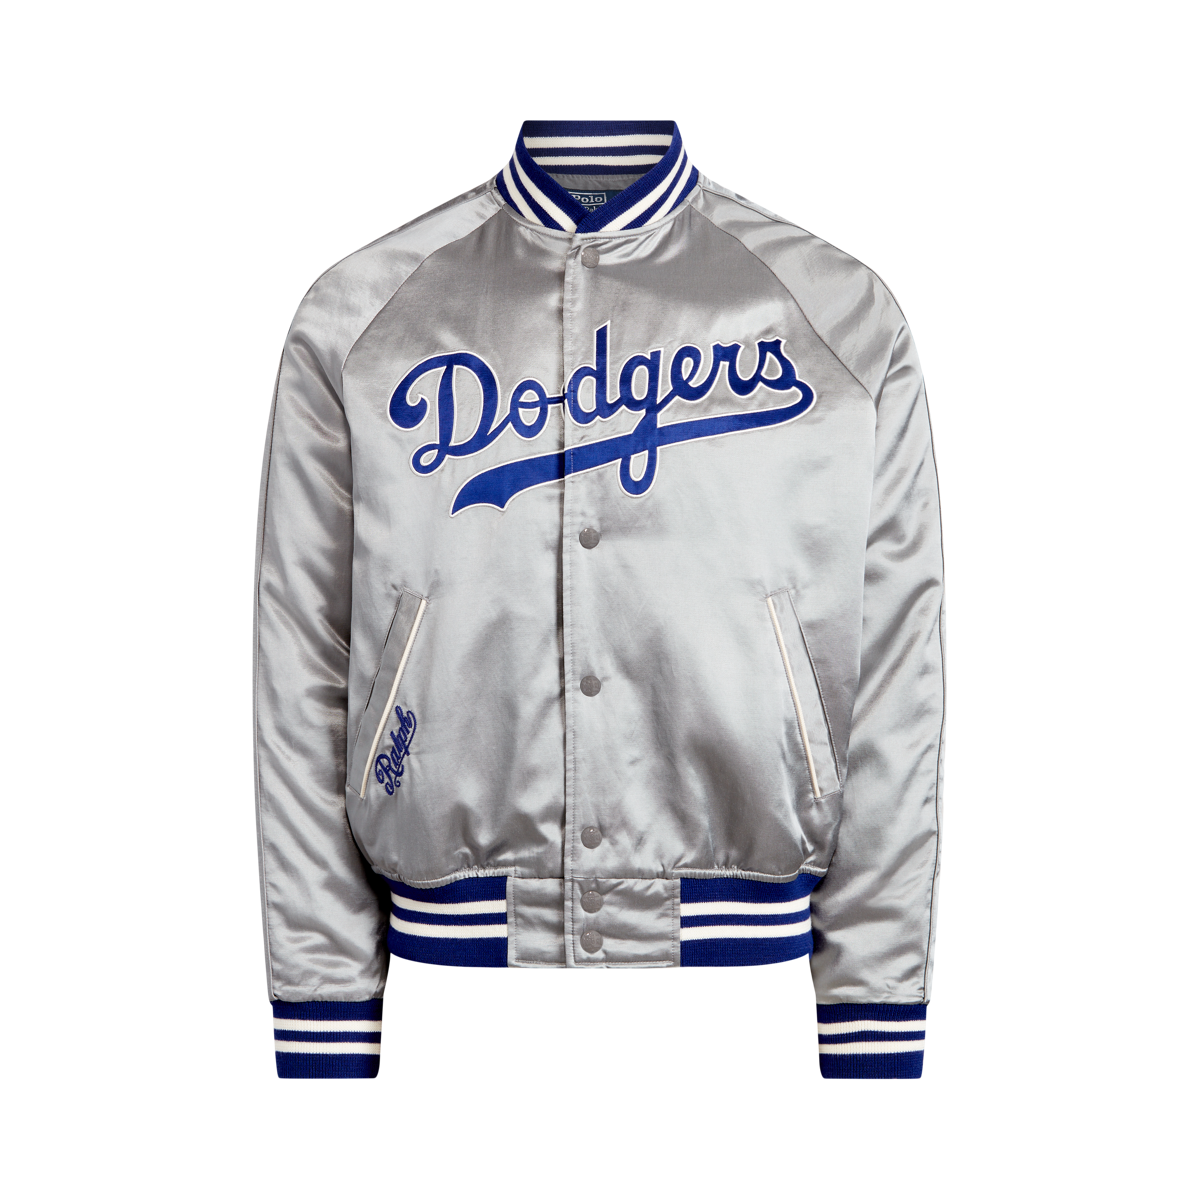 Buy Dodgers Jacket Polyester Jacket